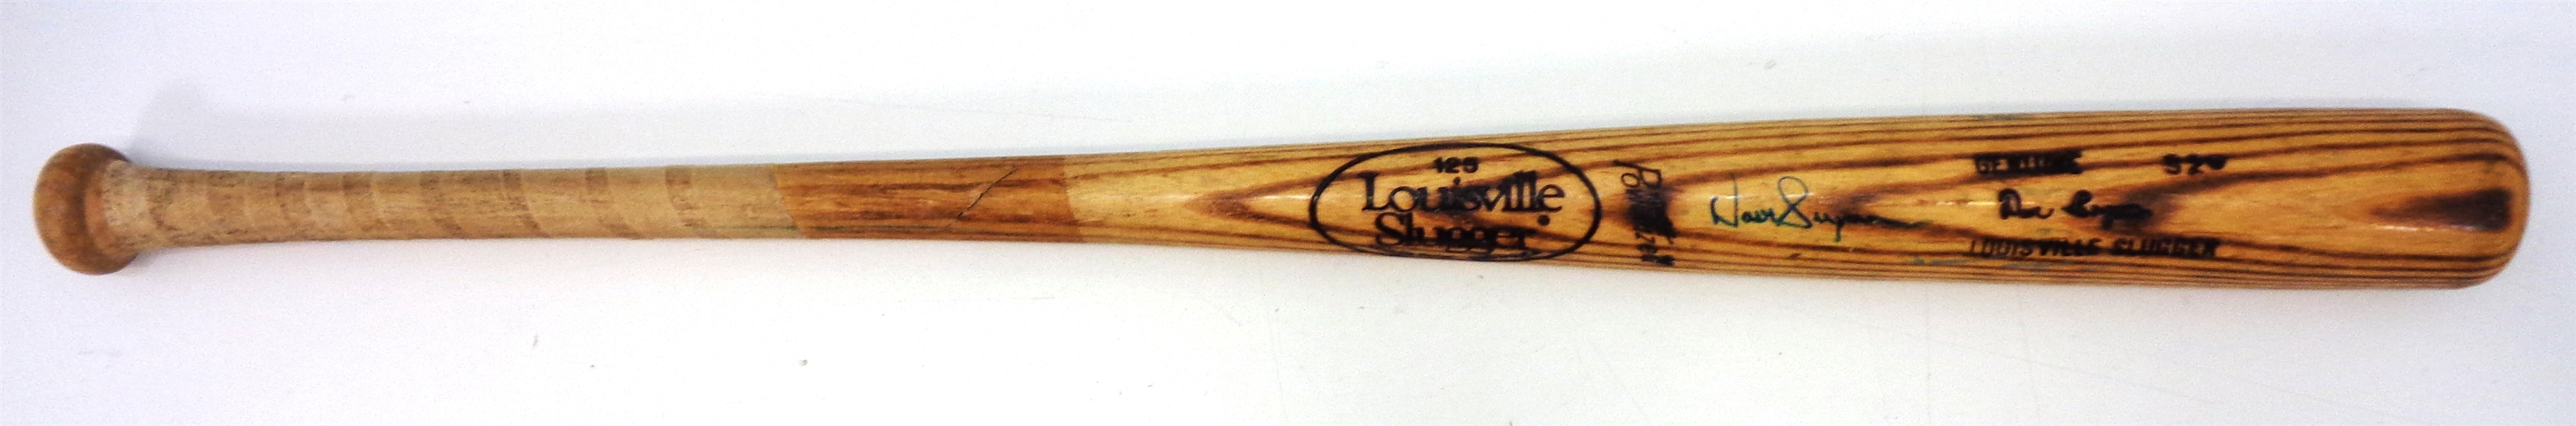 Dave Bergman Autographed Game Used Bat